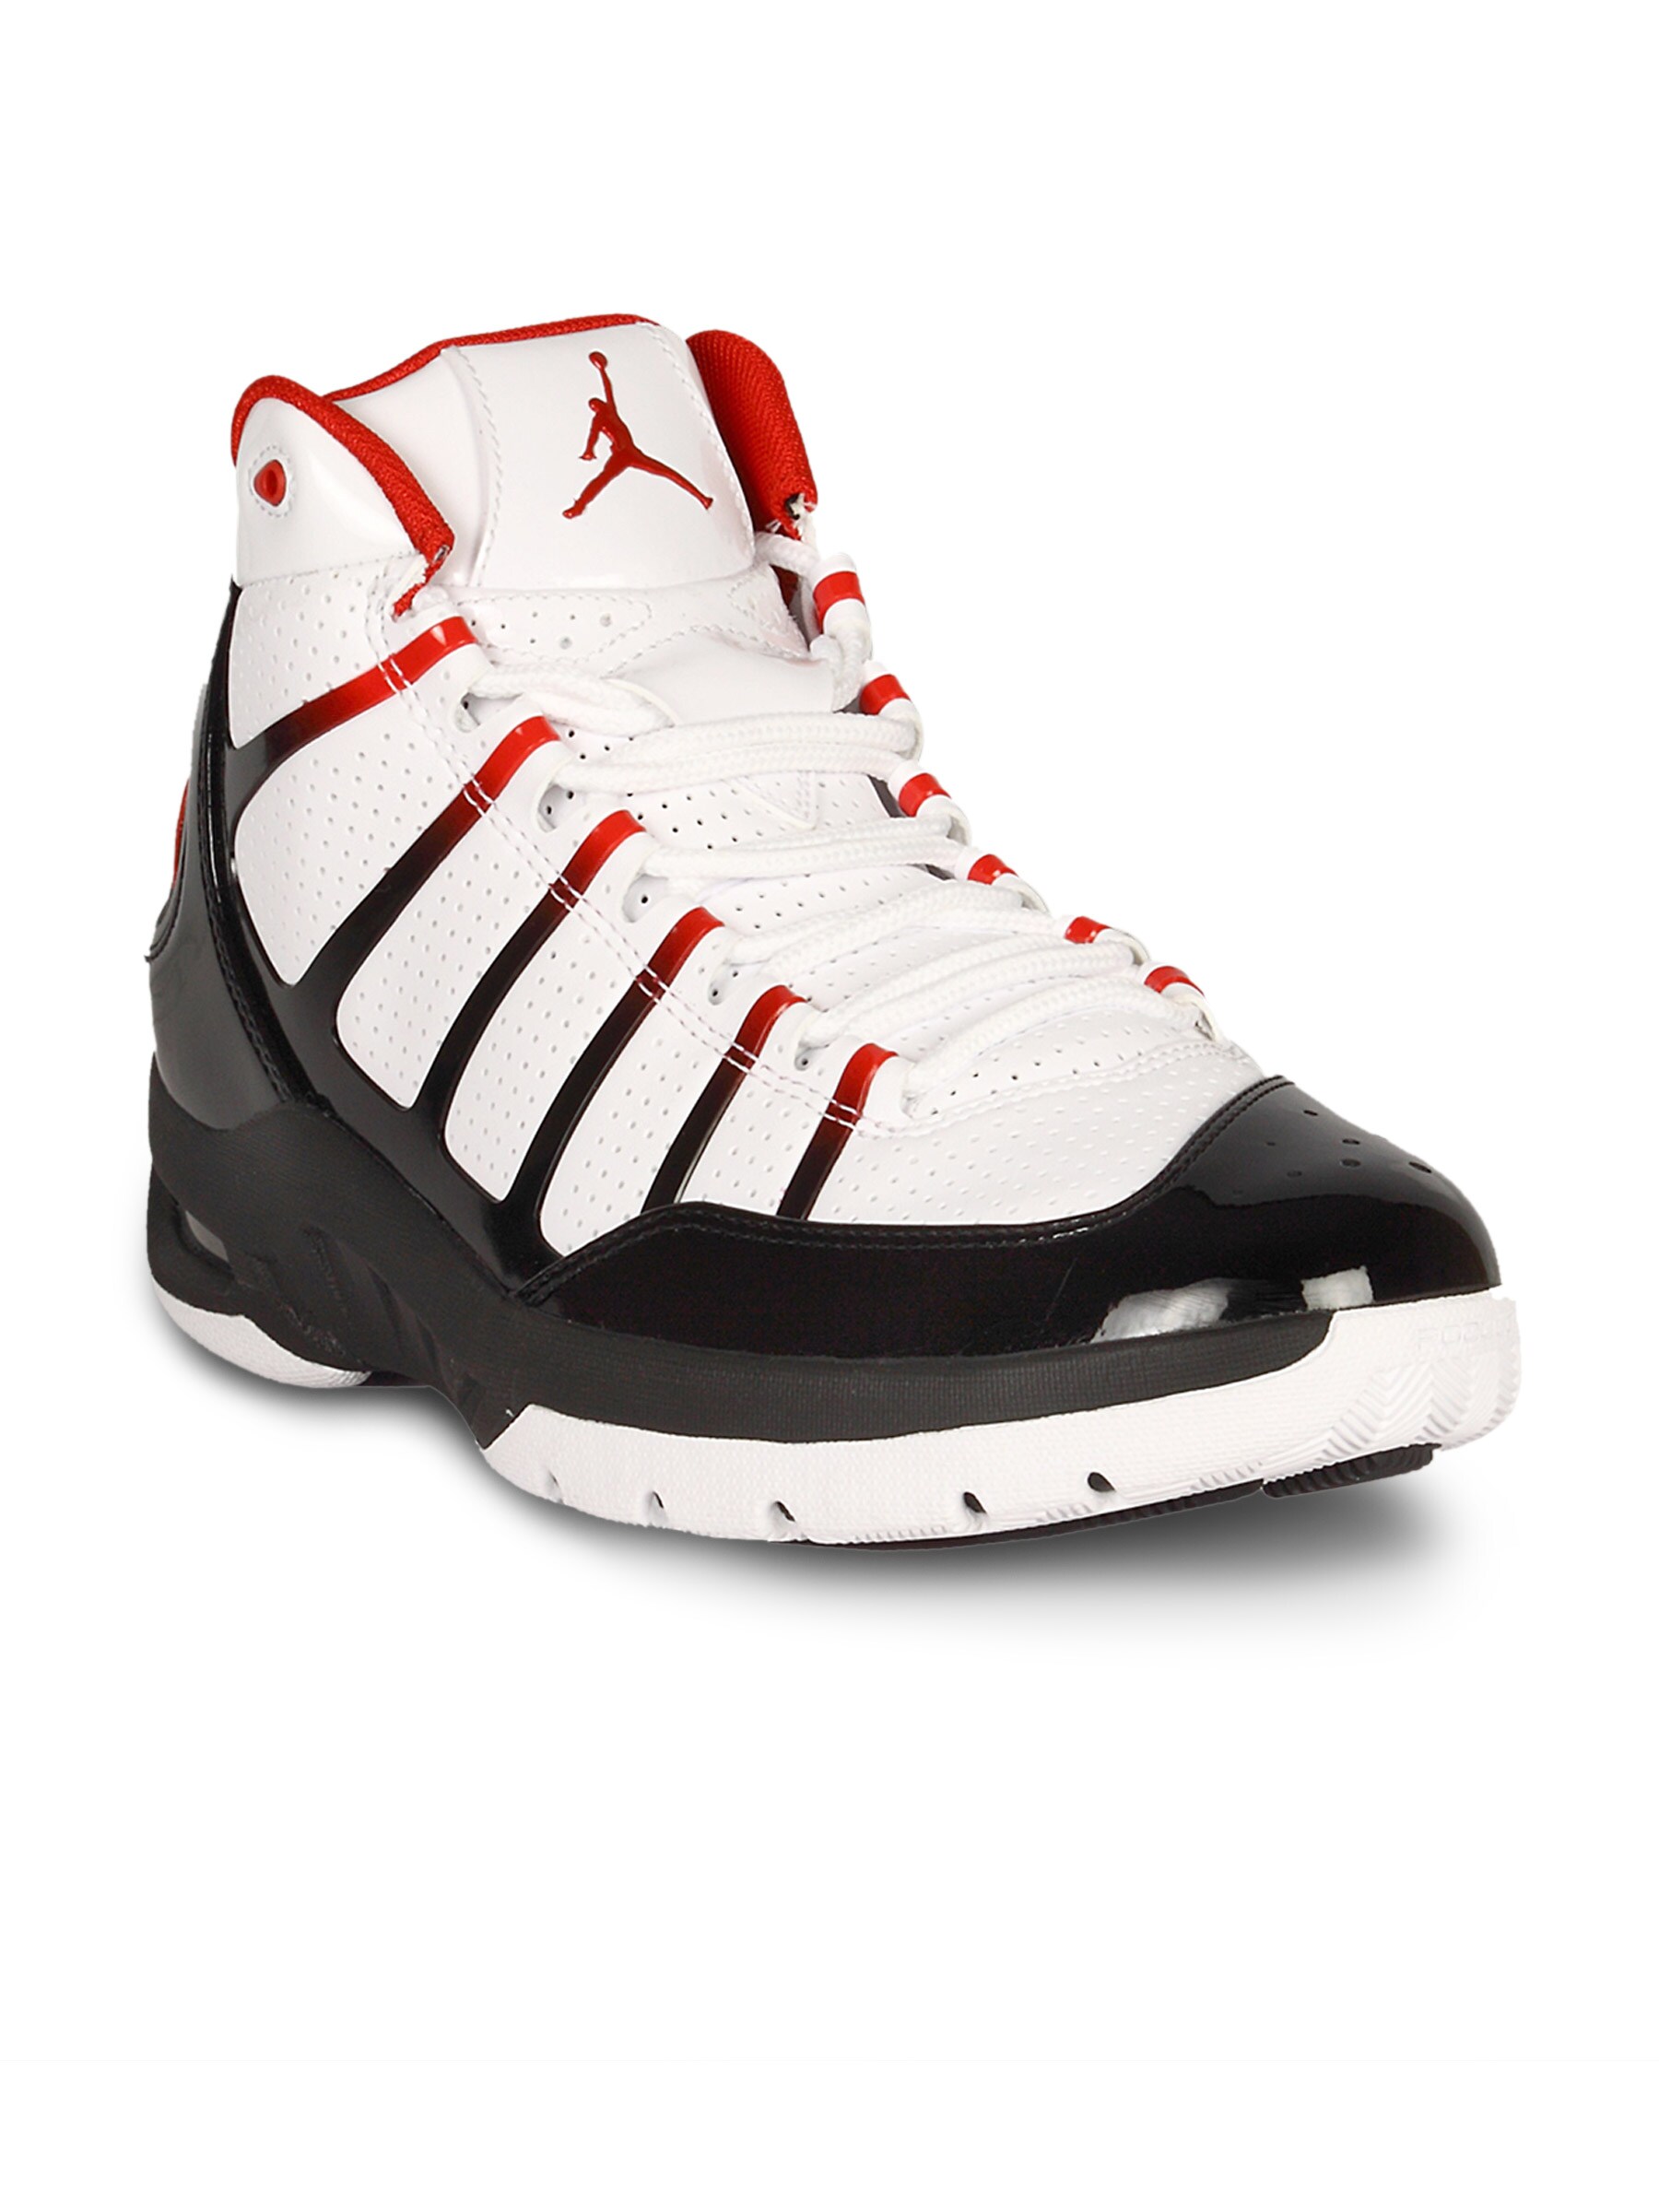 Nike Men's Jordan White Red Black Shoe